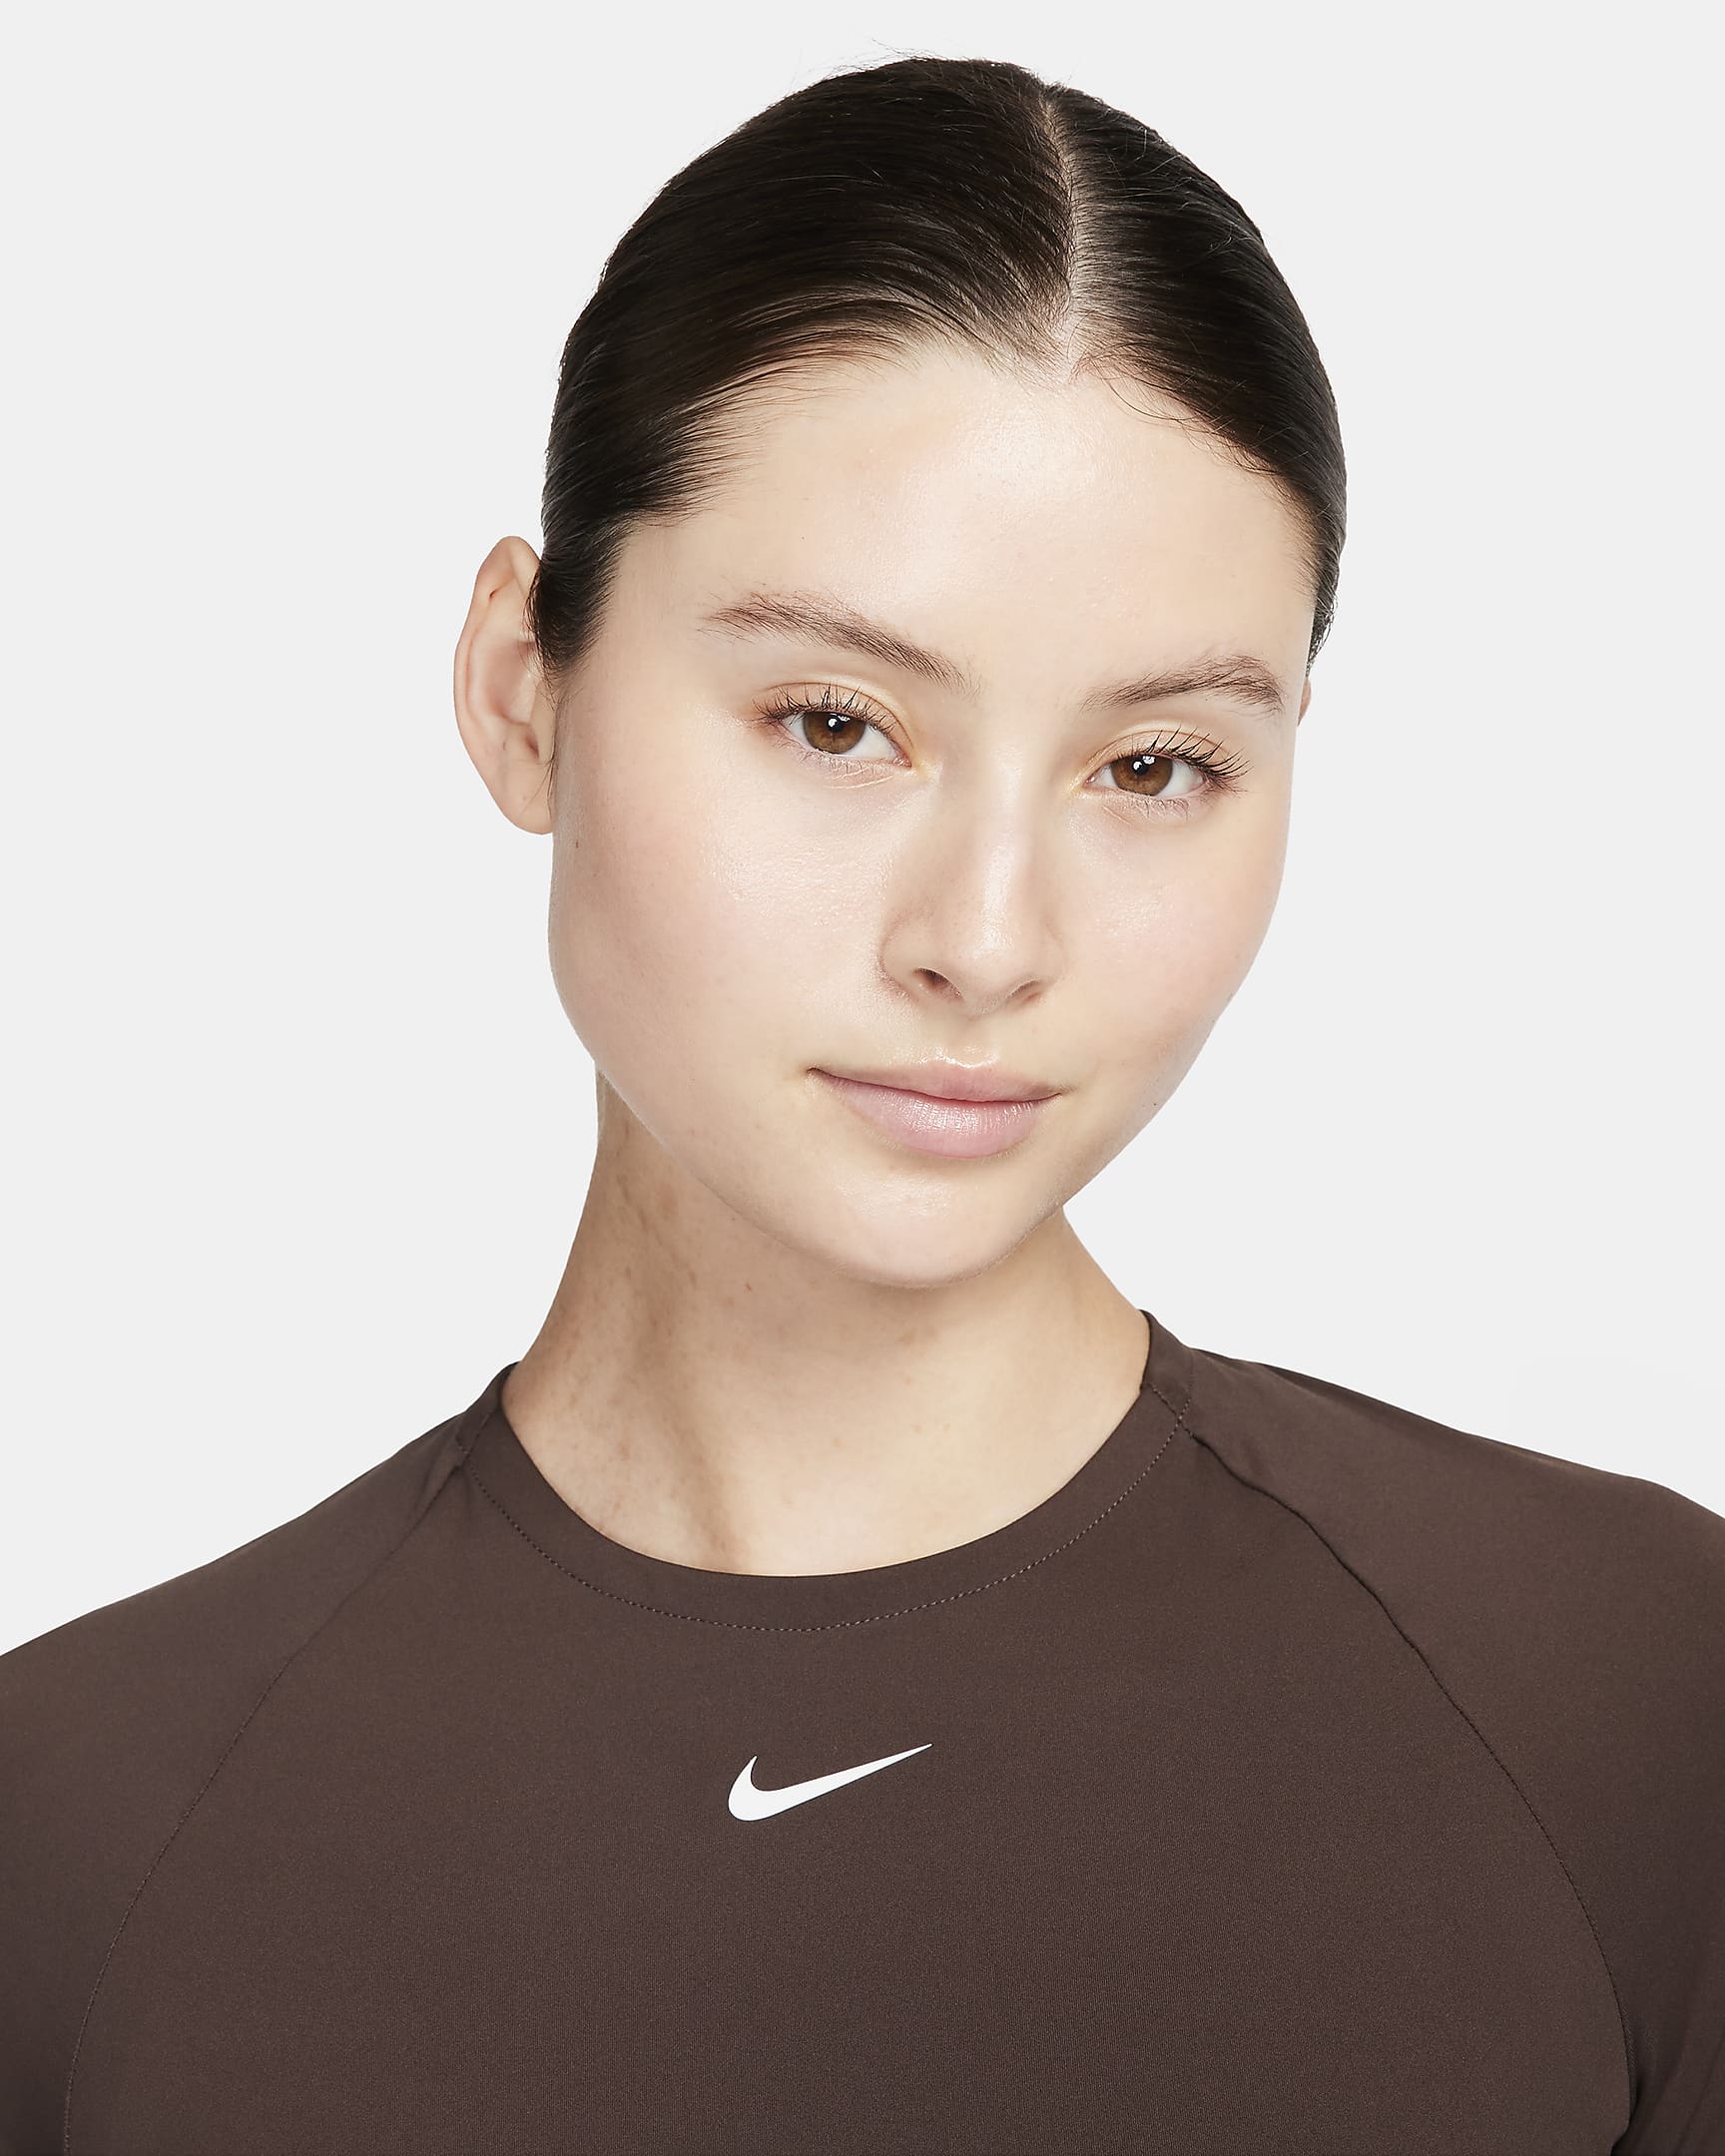 Nike Pro Dri-FIT verkürztes Longsleeve (Damen) - Baroque Brown/Weiß